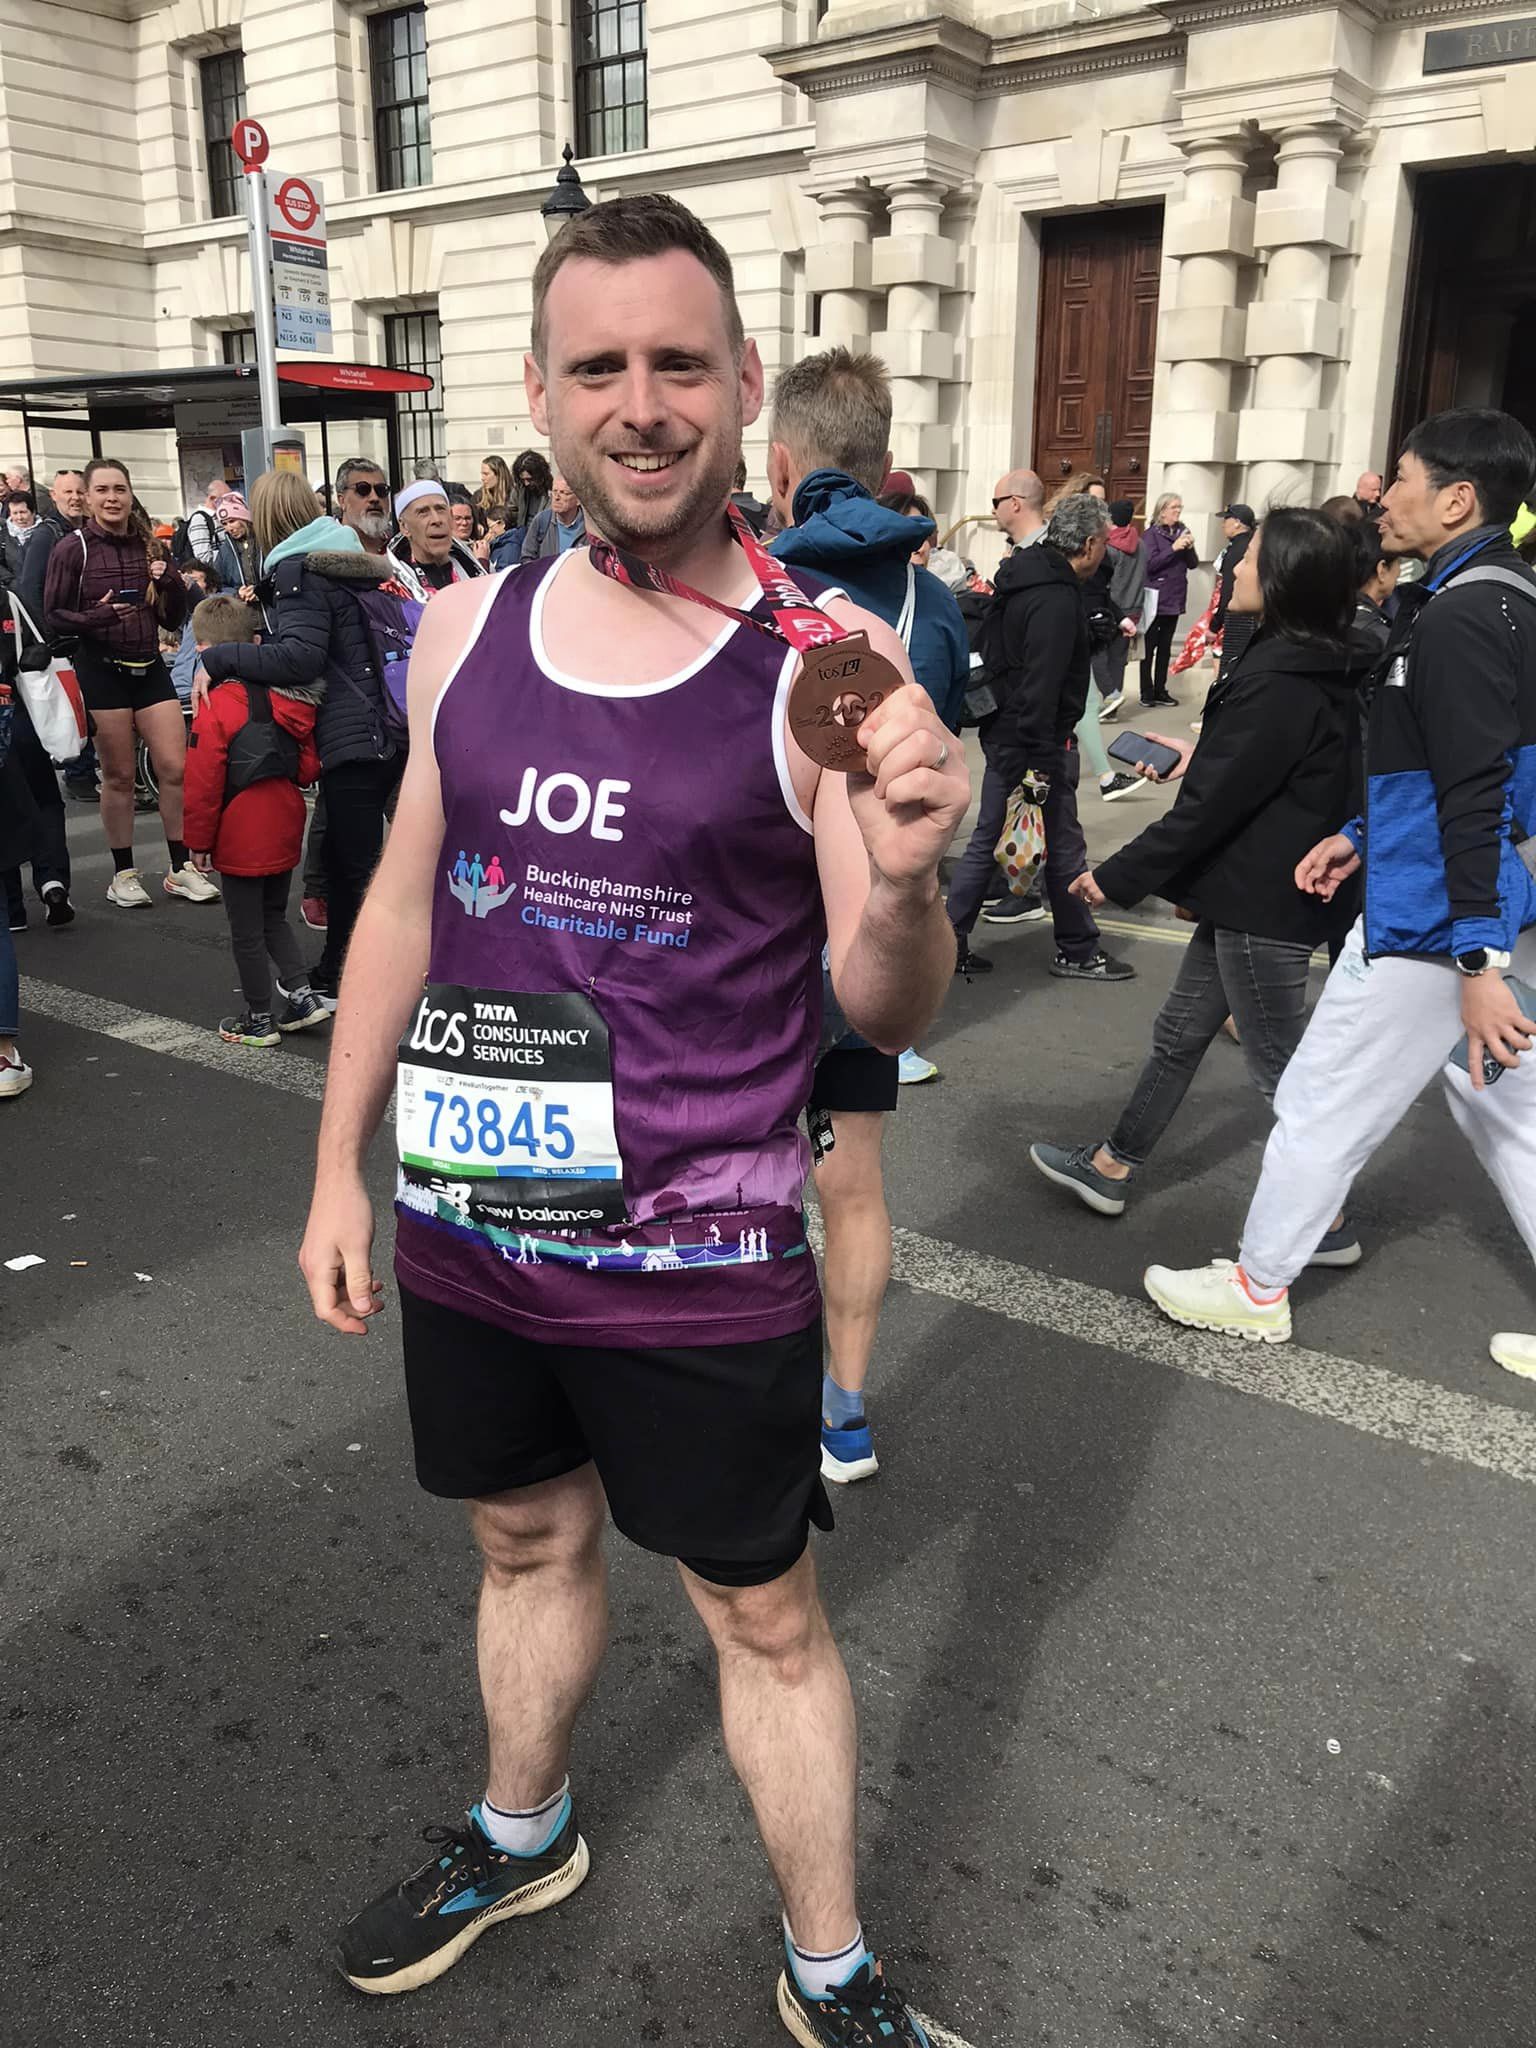 Joe Holding his London Marathon Medal wearing a purple Buckinghamshire Healthcare NHS Trust Charitable Fund running vest